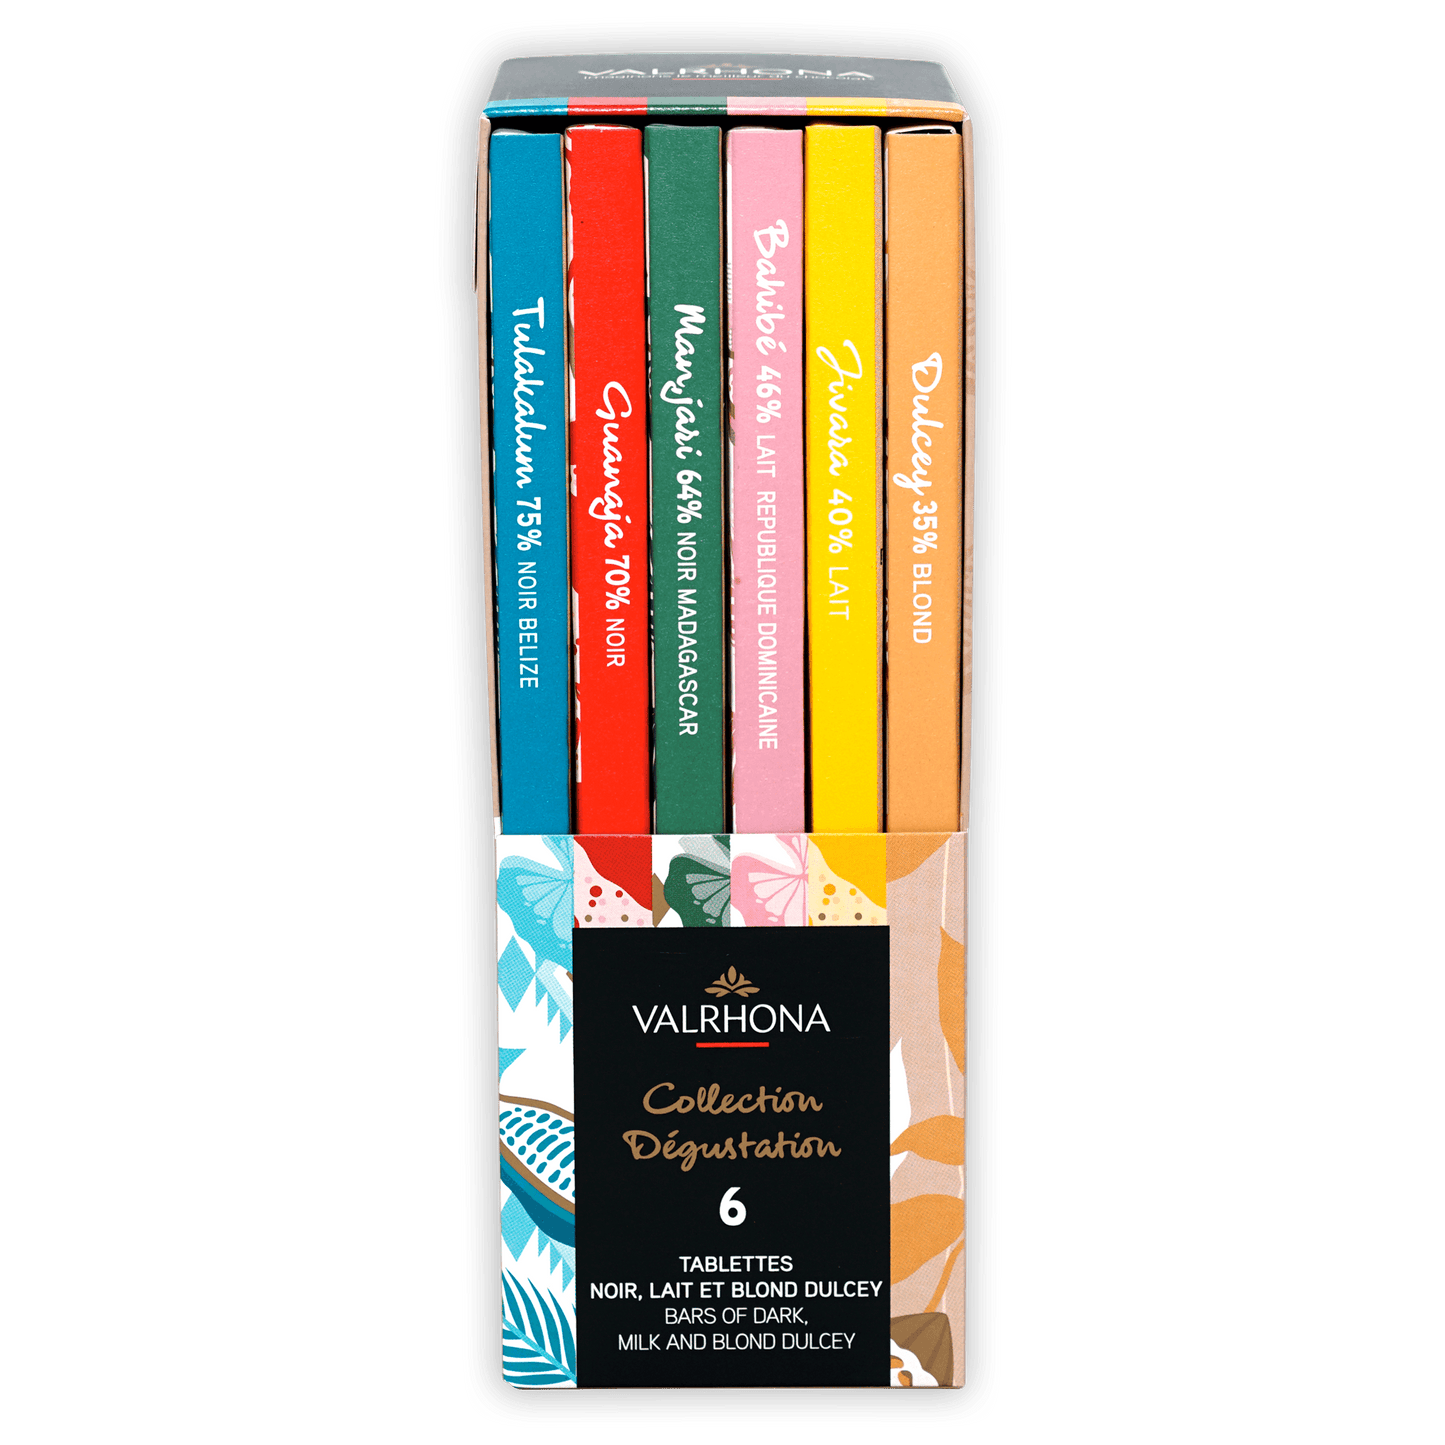 Valrhona Tasting Bars Chocolate Gift Box (6 Bars)